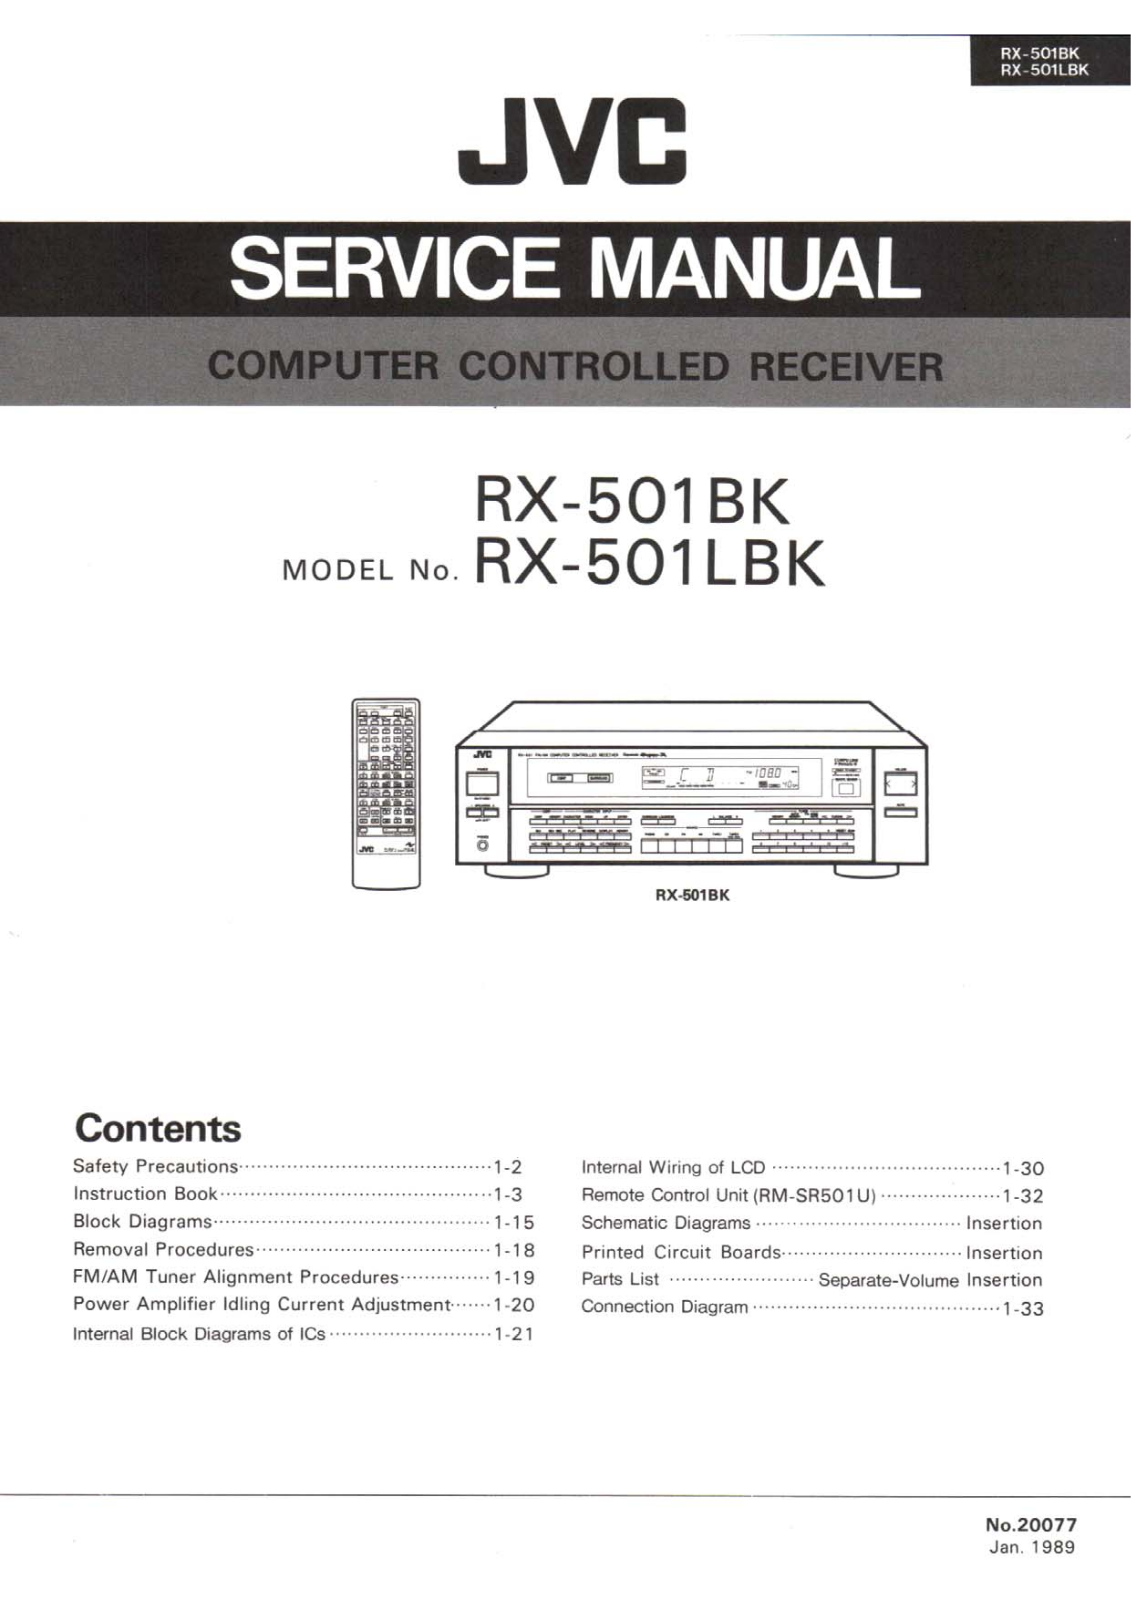 Jvc RX-501-LBK, RX-501-BK Service Manual